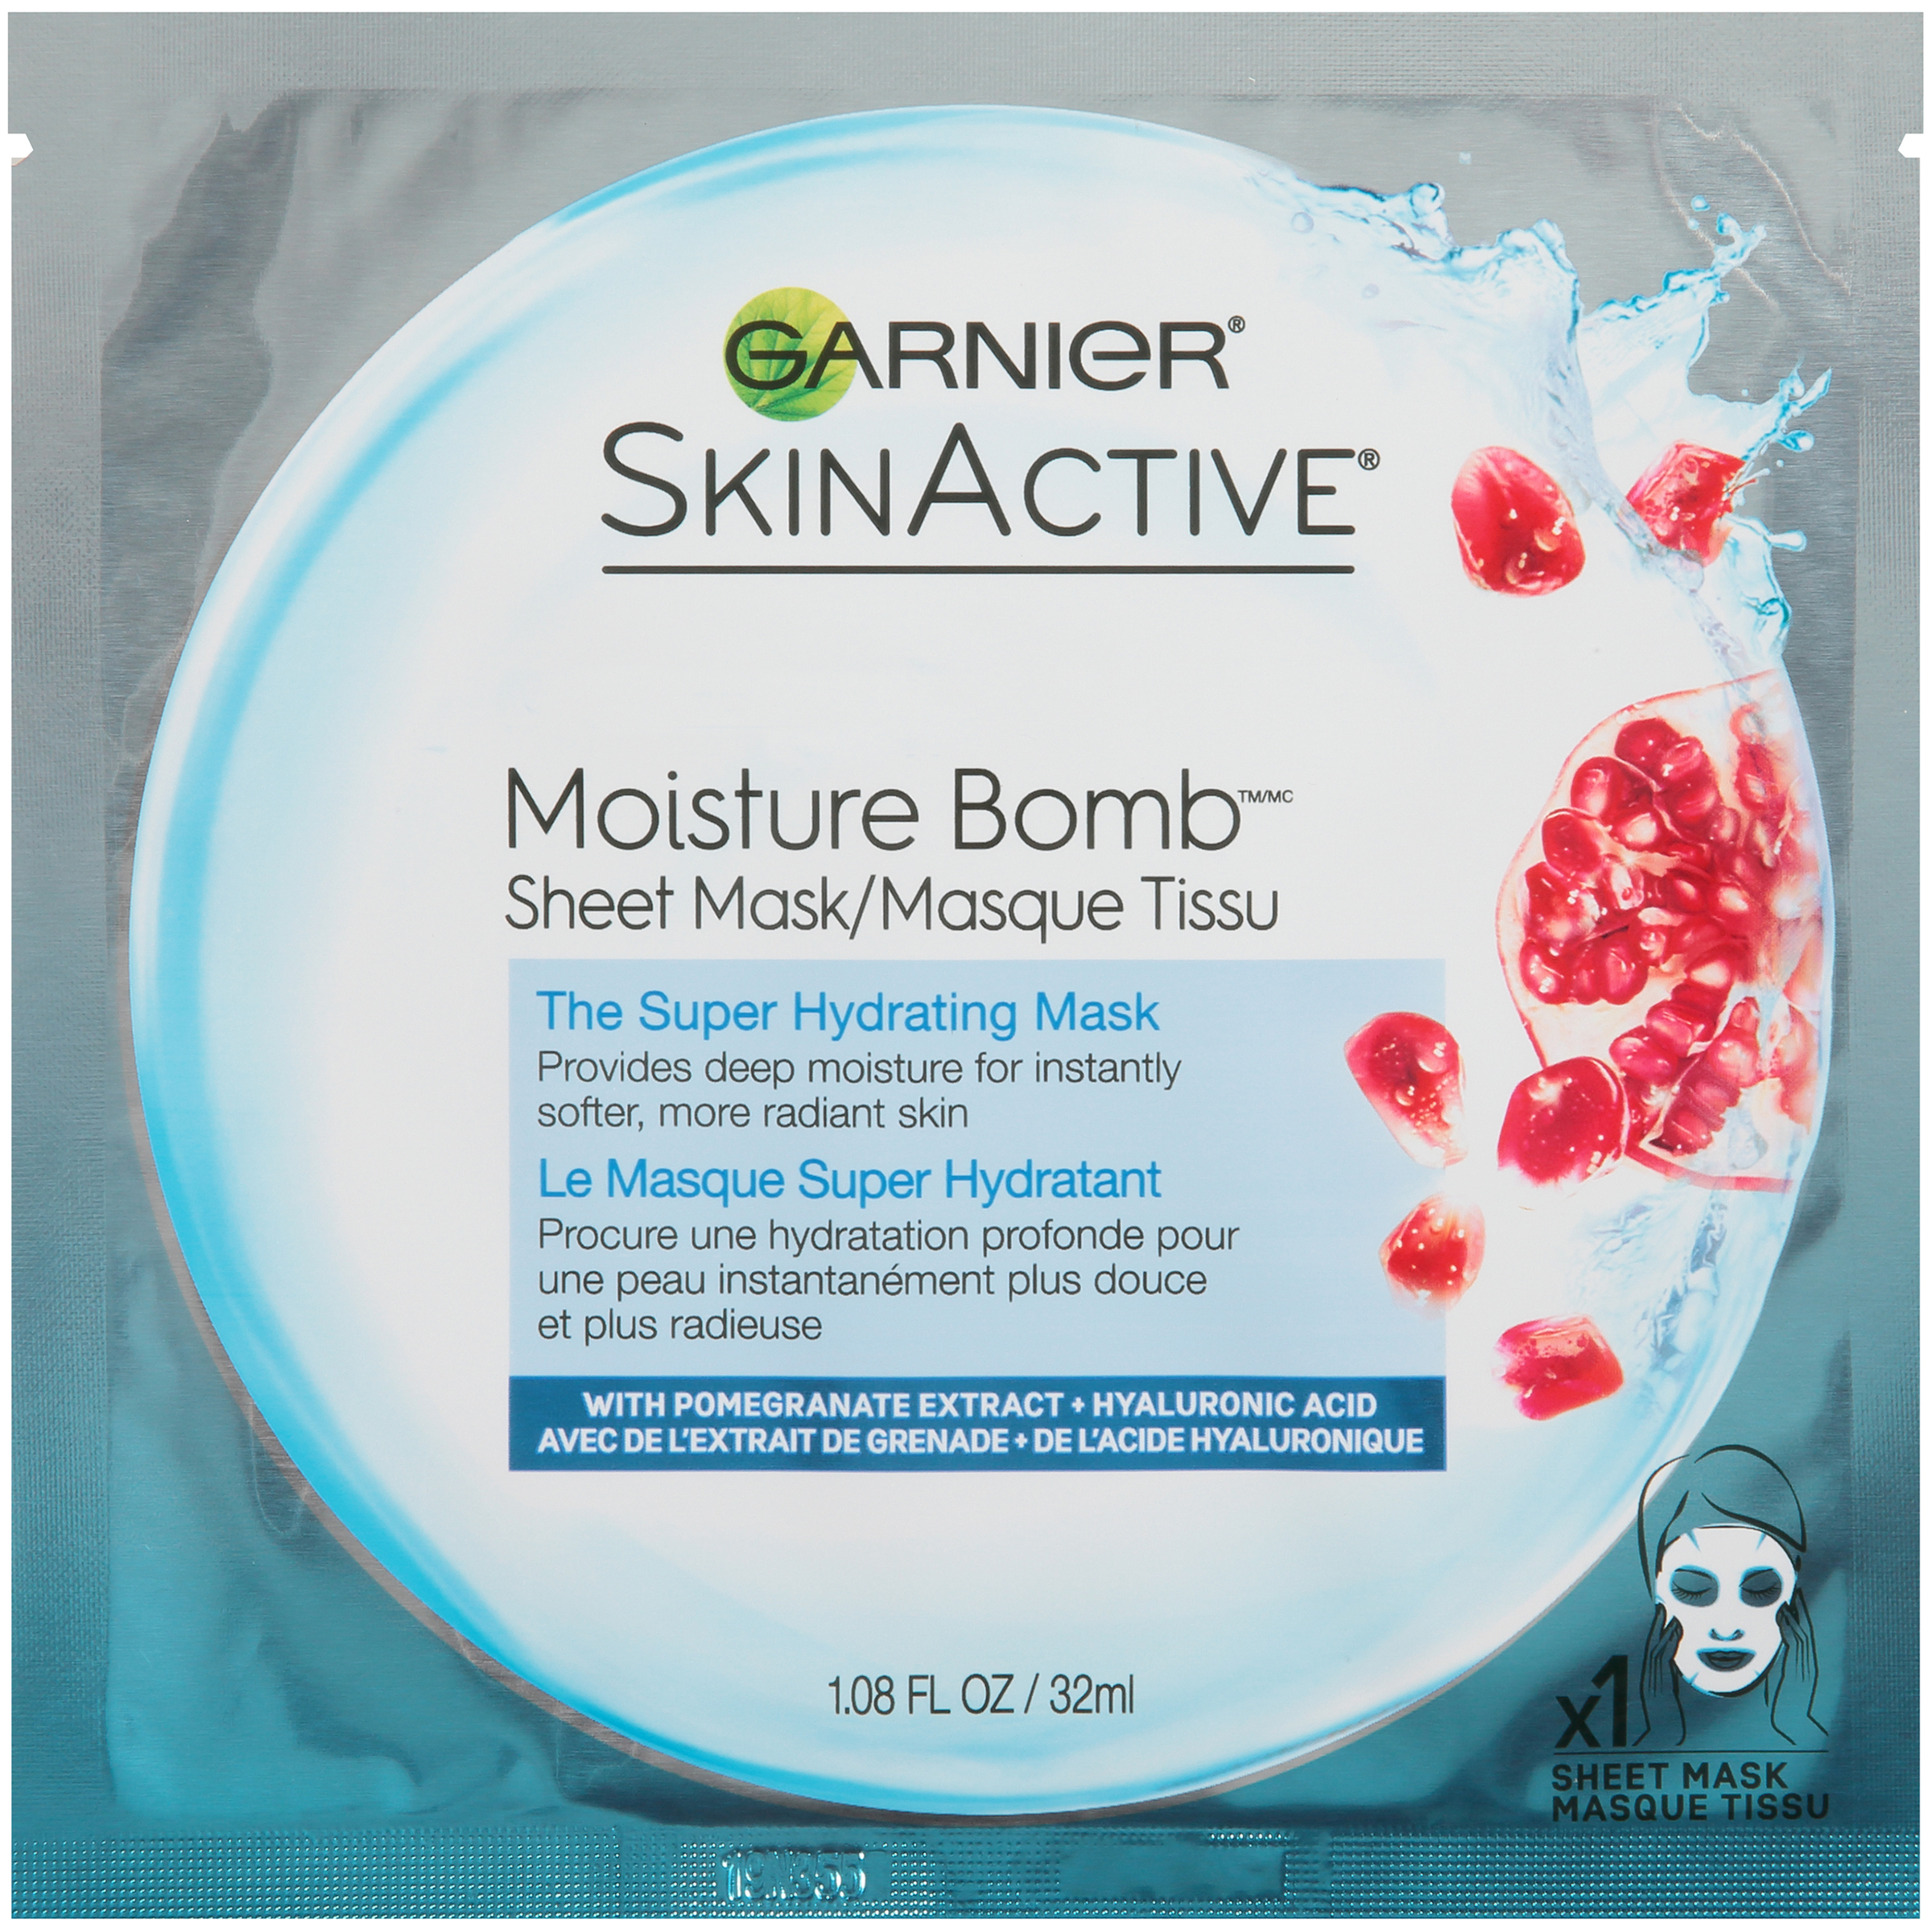 Skinactive moisture bomb sheet mask